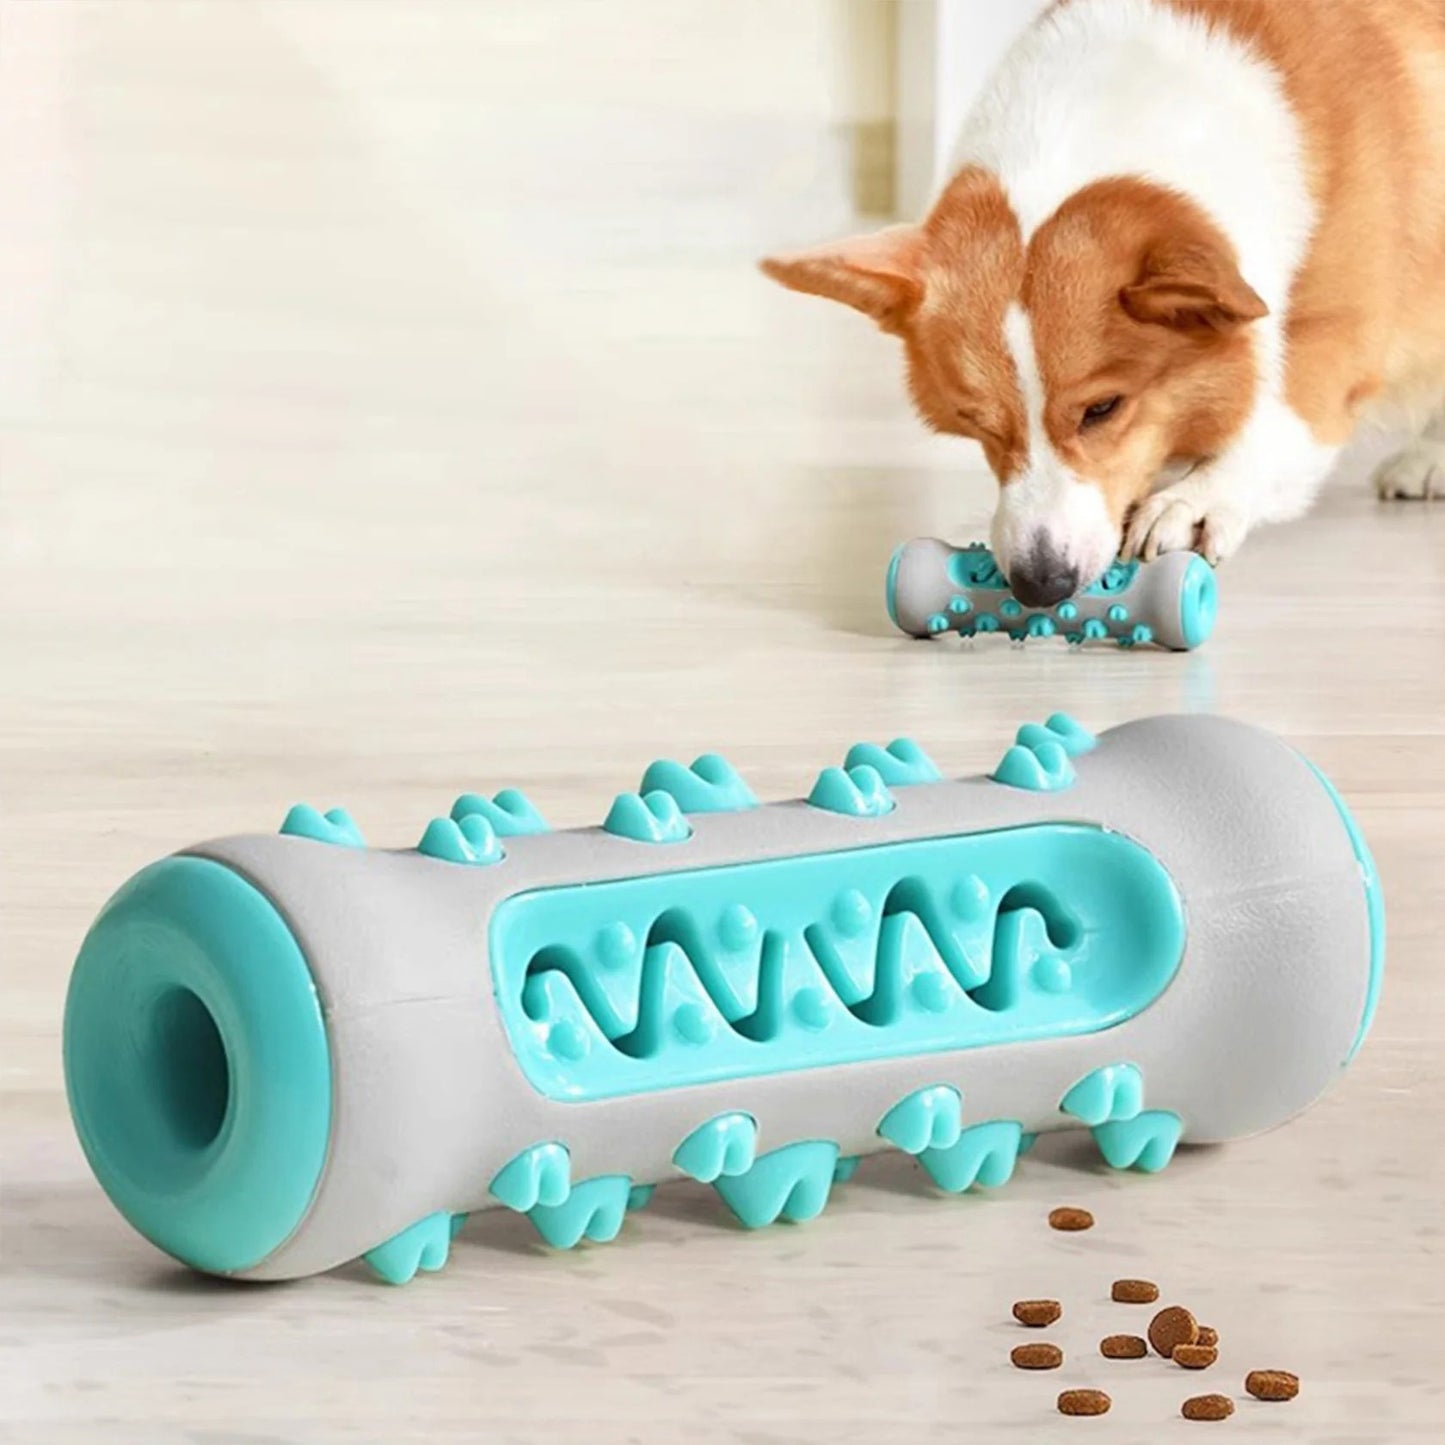 Dog Chew & Teeth Cleaning Toy